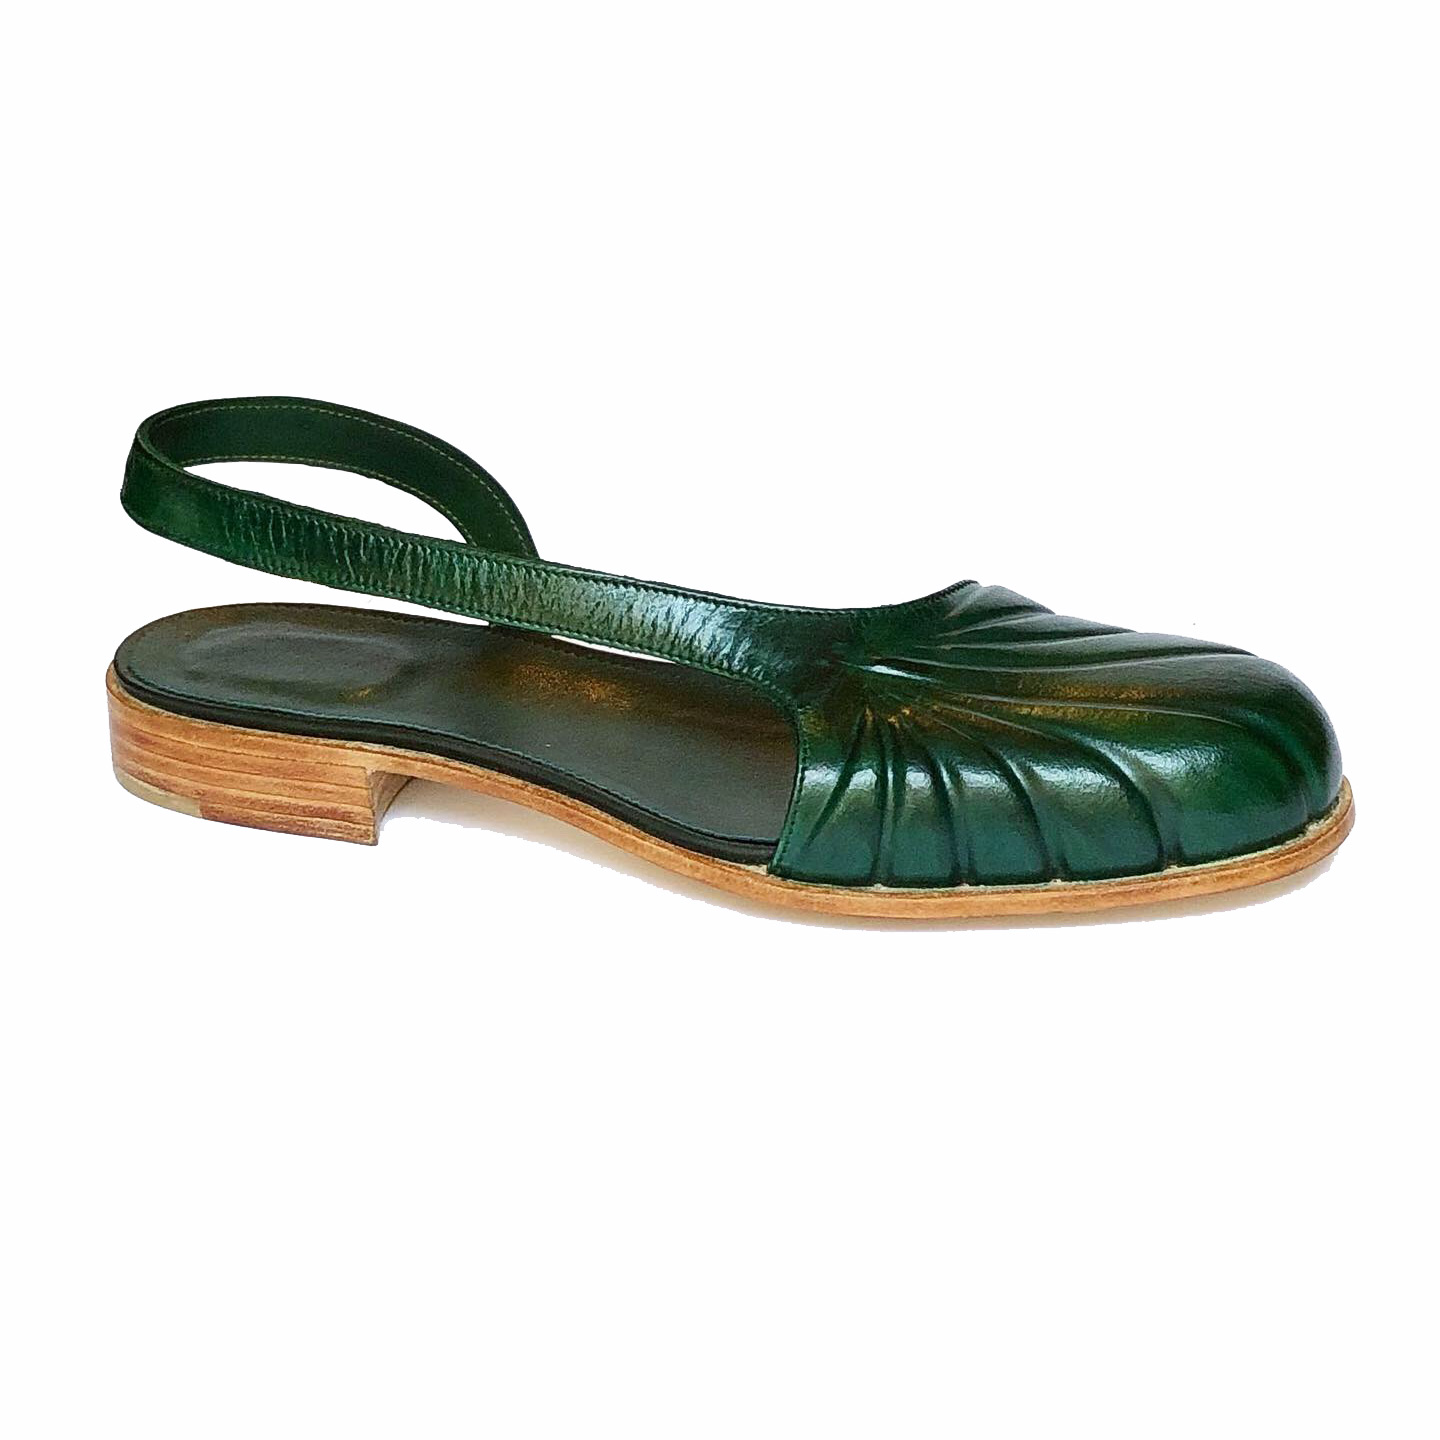 Shoe prototypes green